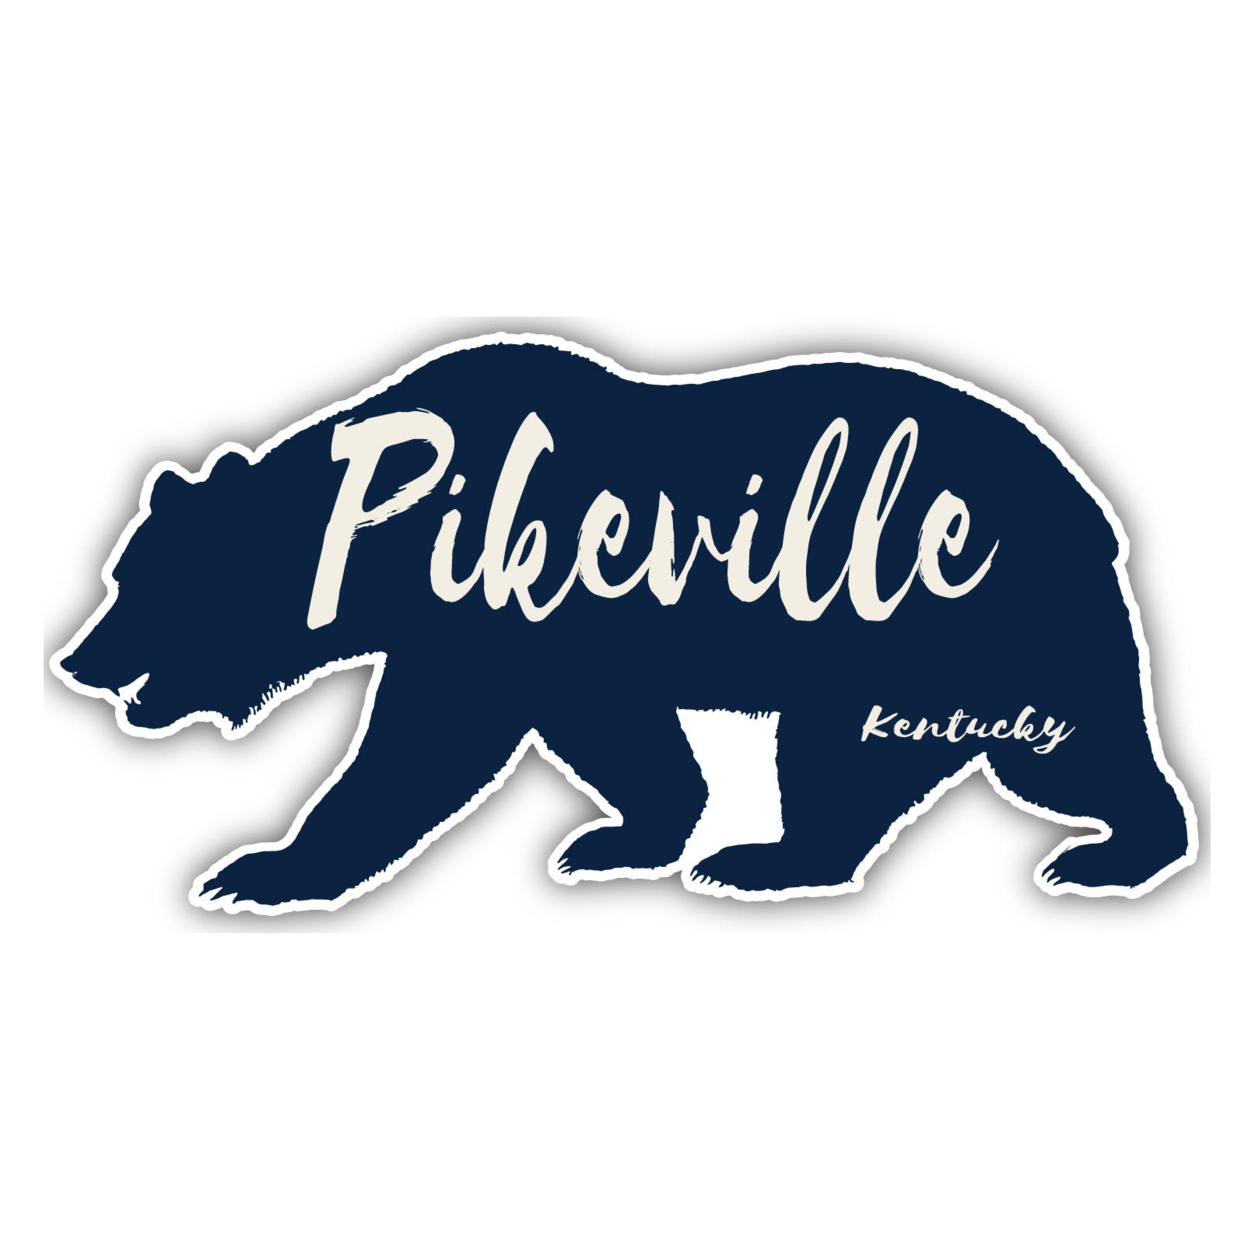 Pikeville Kentucky Souvenir Decorative Stickers (Choose Theme And Size) - Single Unit, 4-Inch, Adventures Awaits